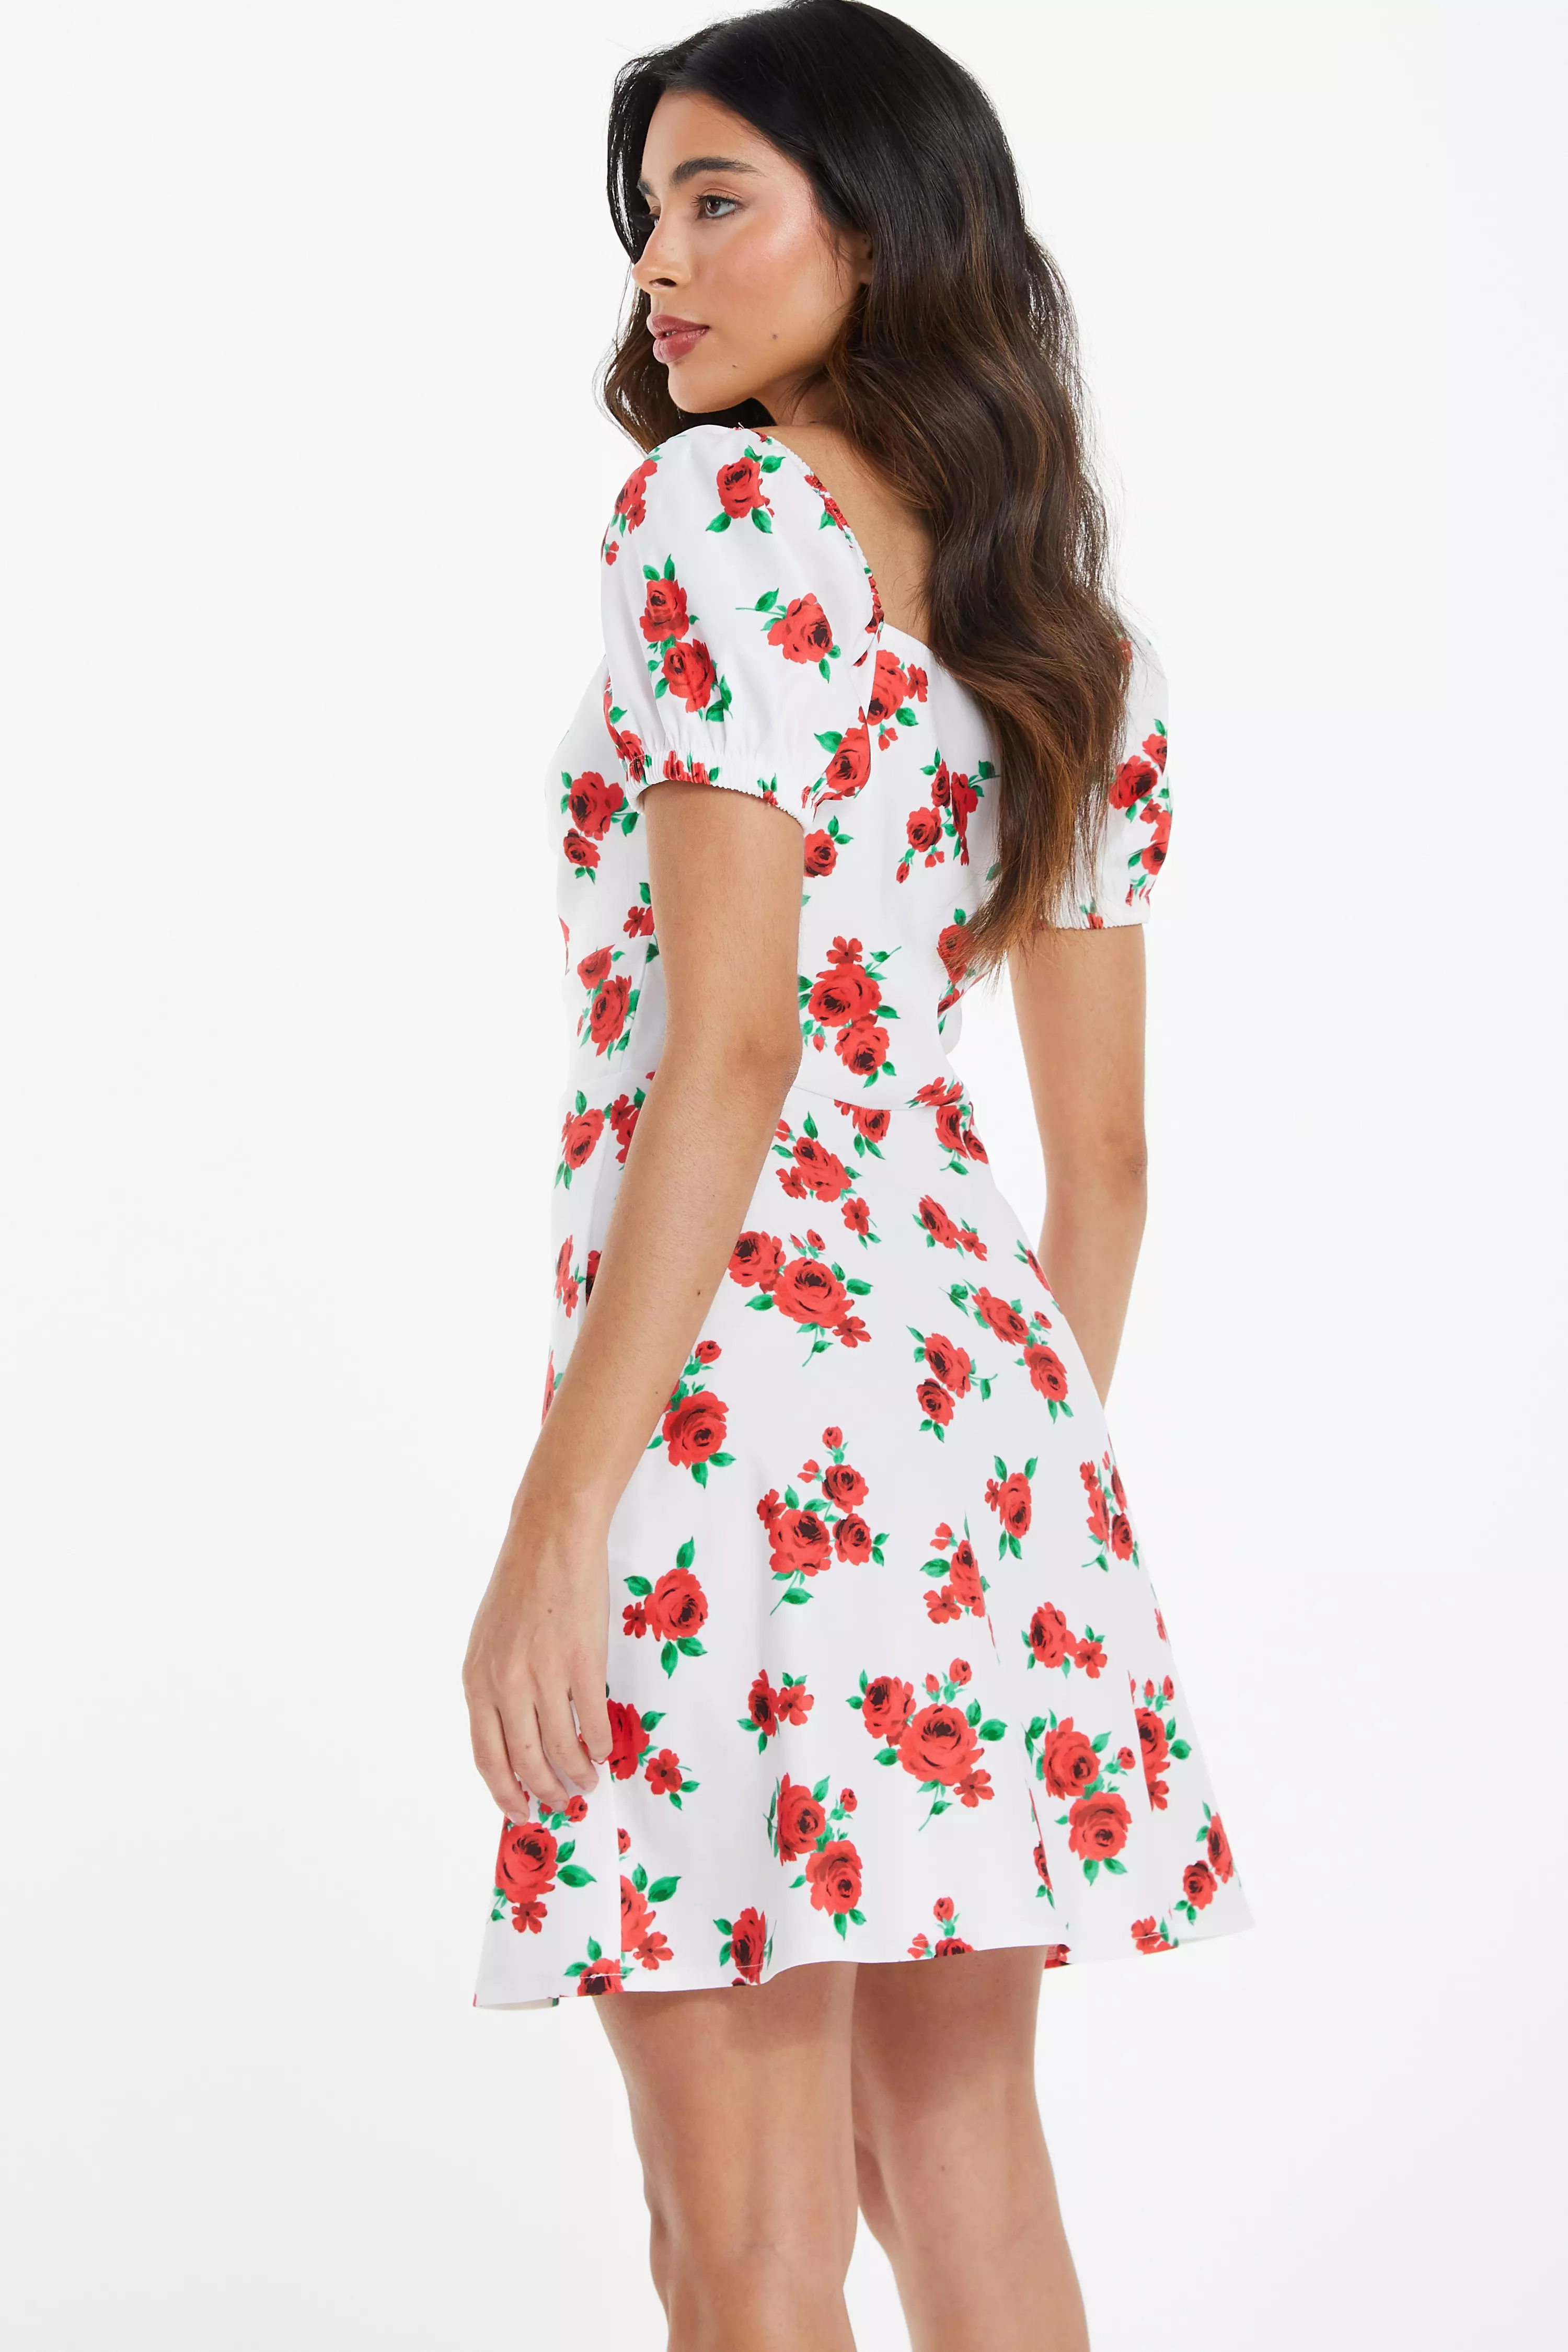 White Rose Print Mini Dress - QUIZ Clothing